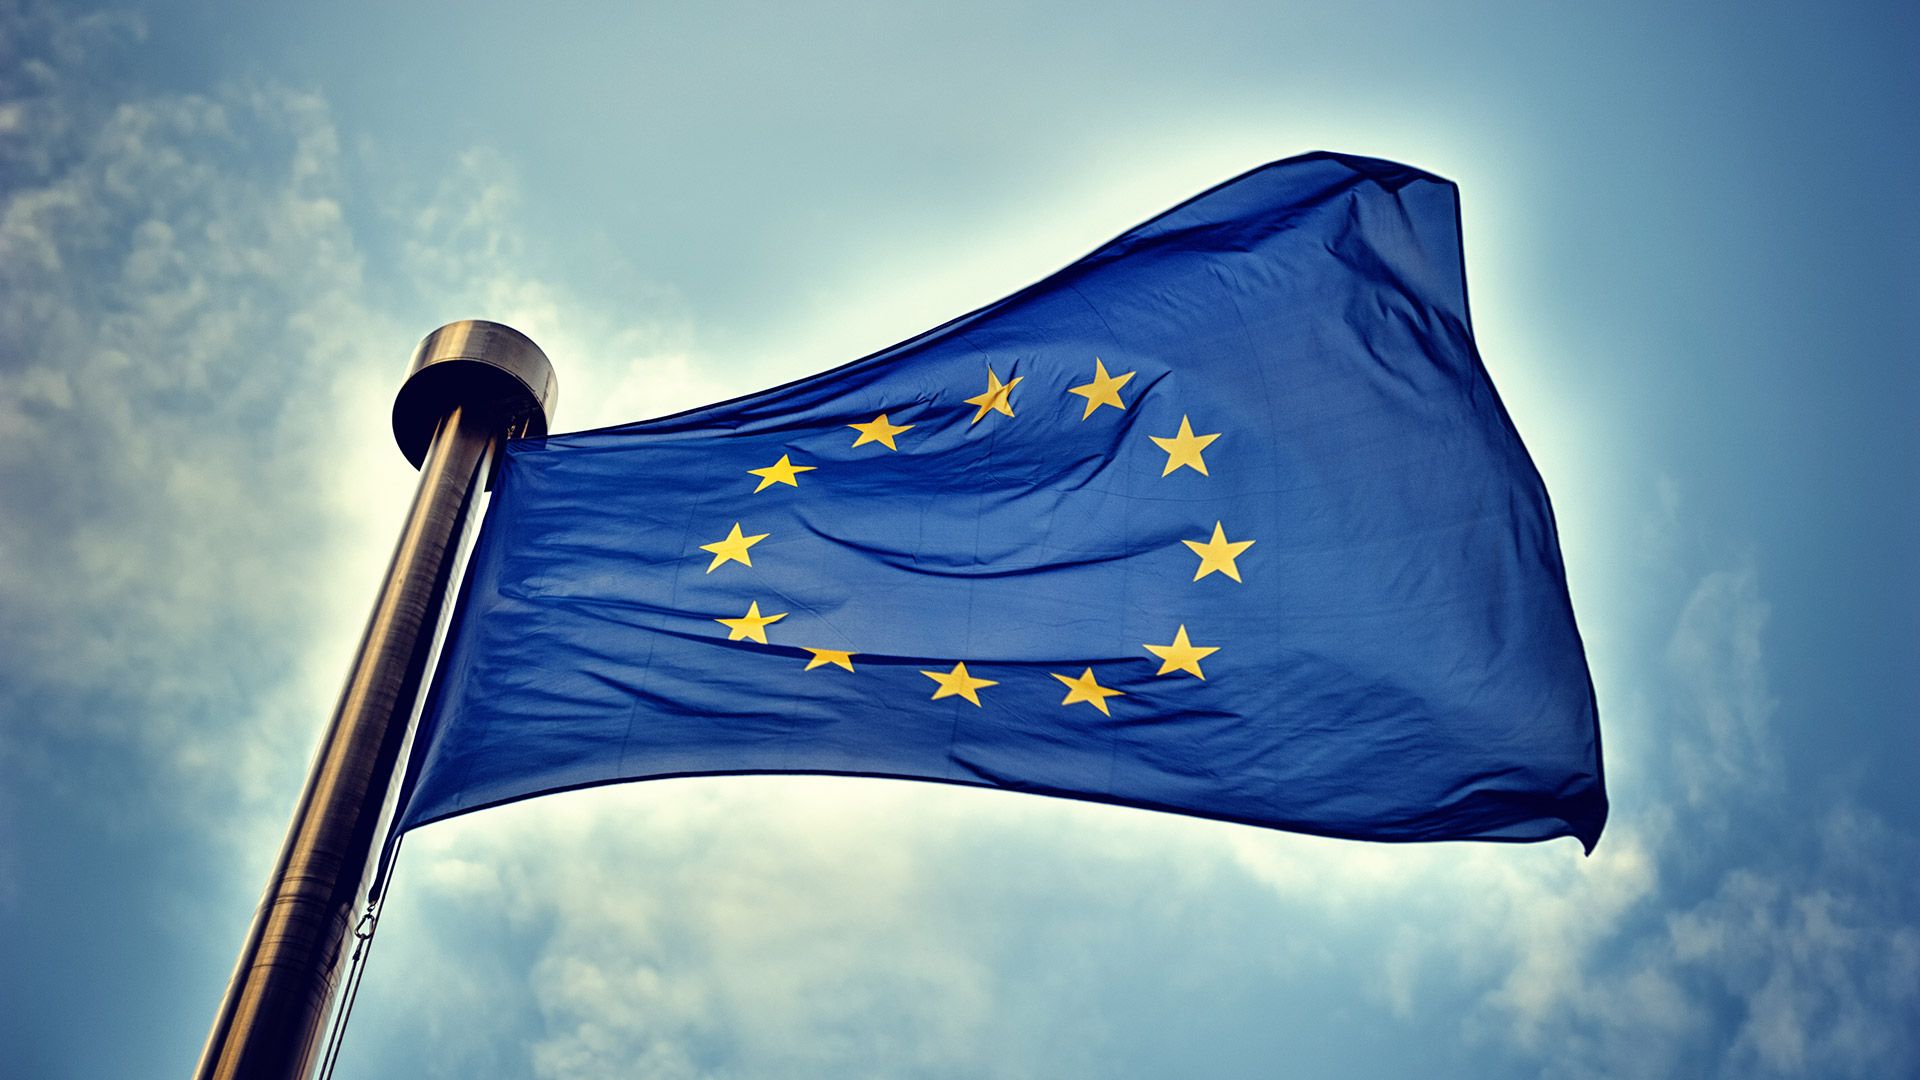 Apply for the European Union's Paid Blue Book Traineeship